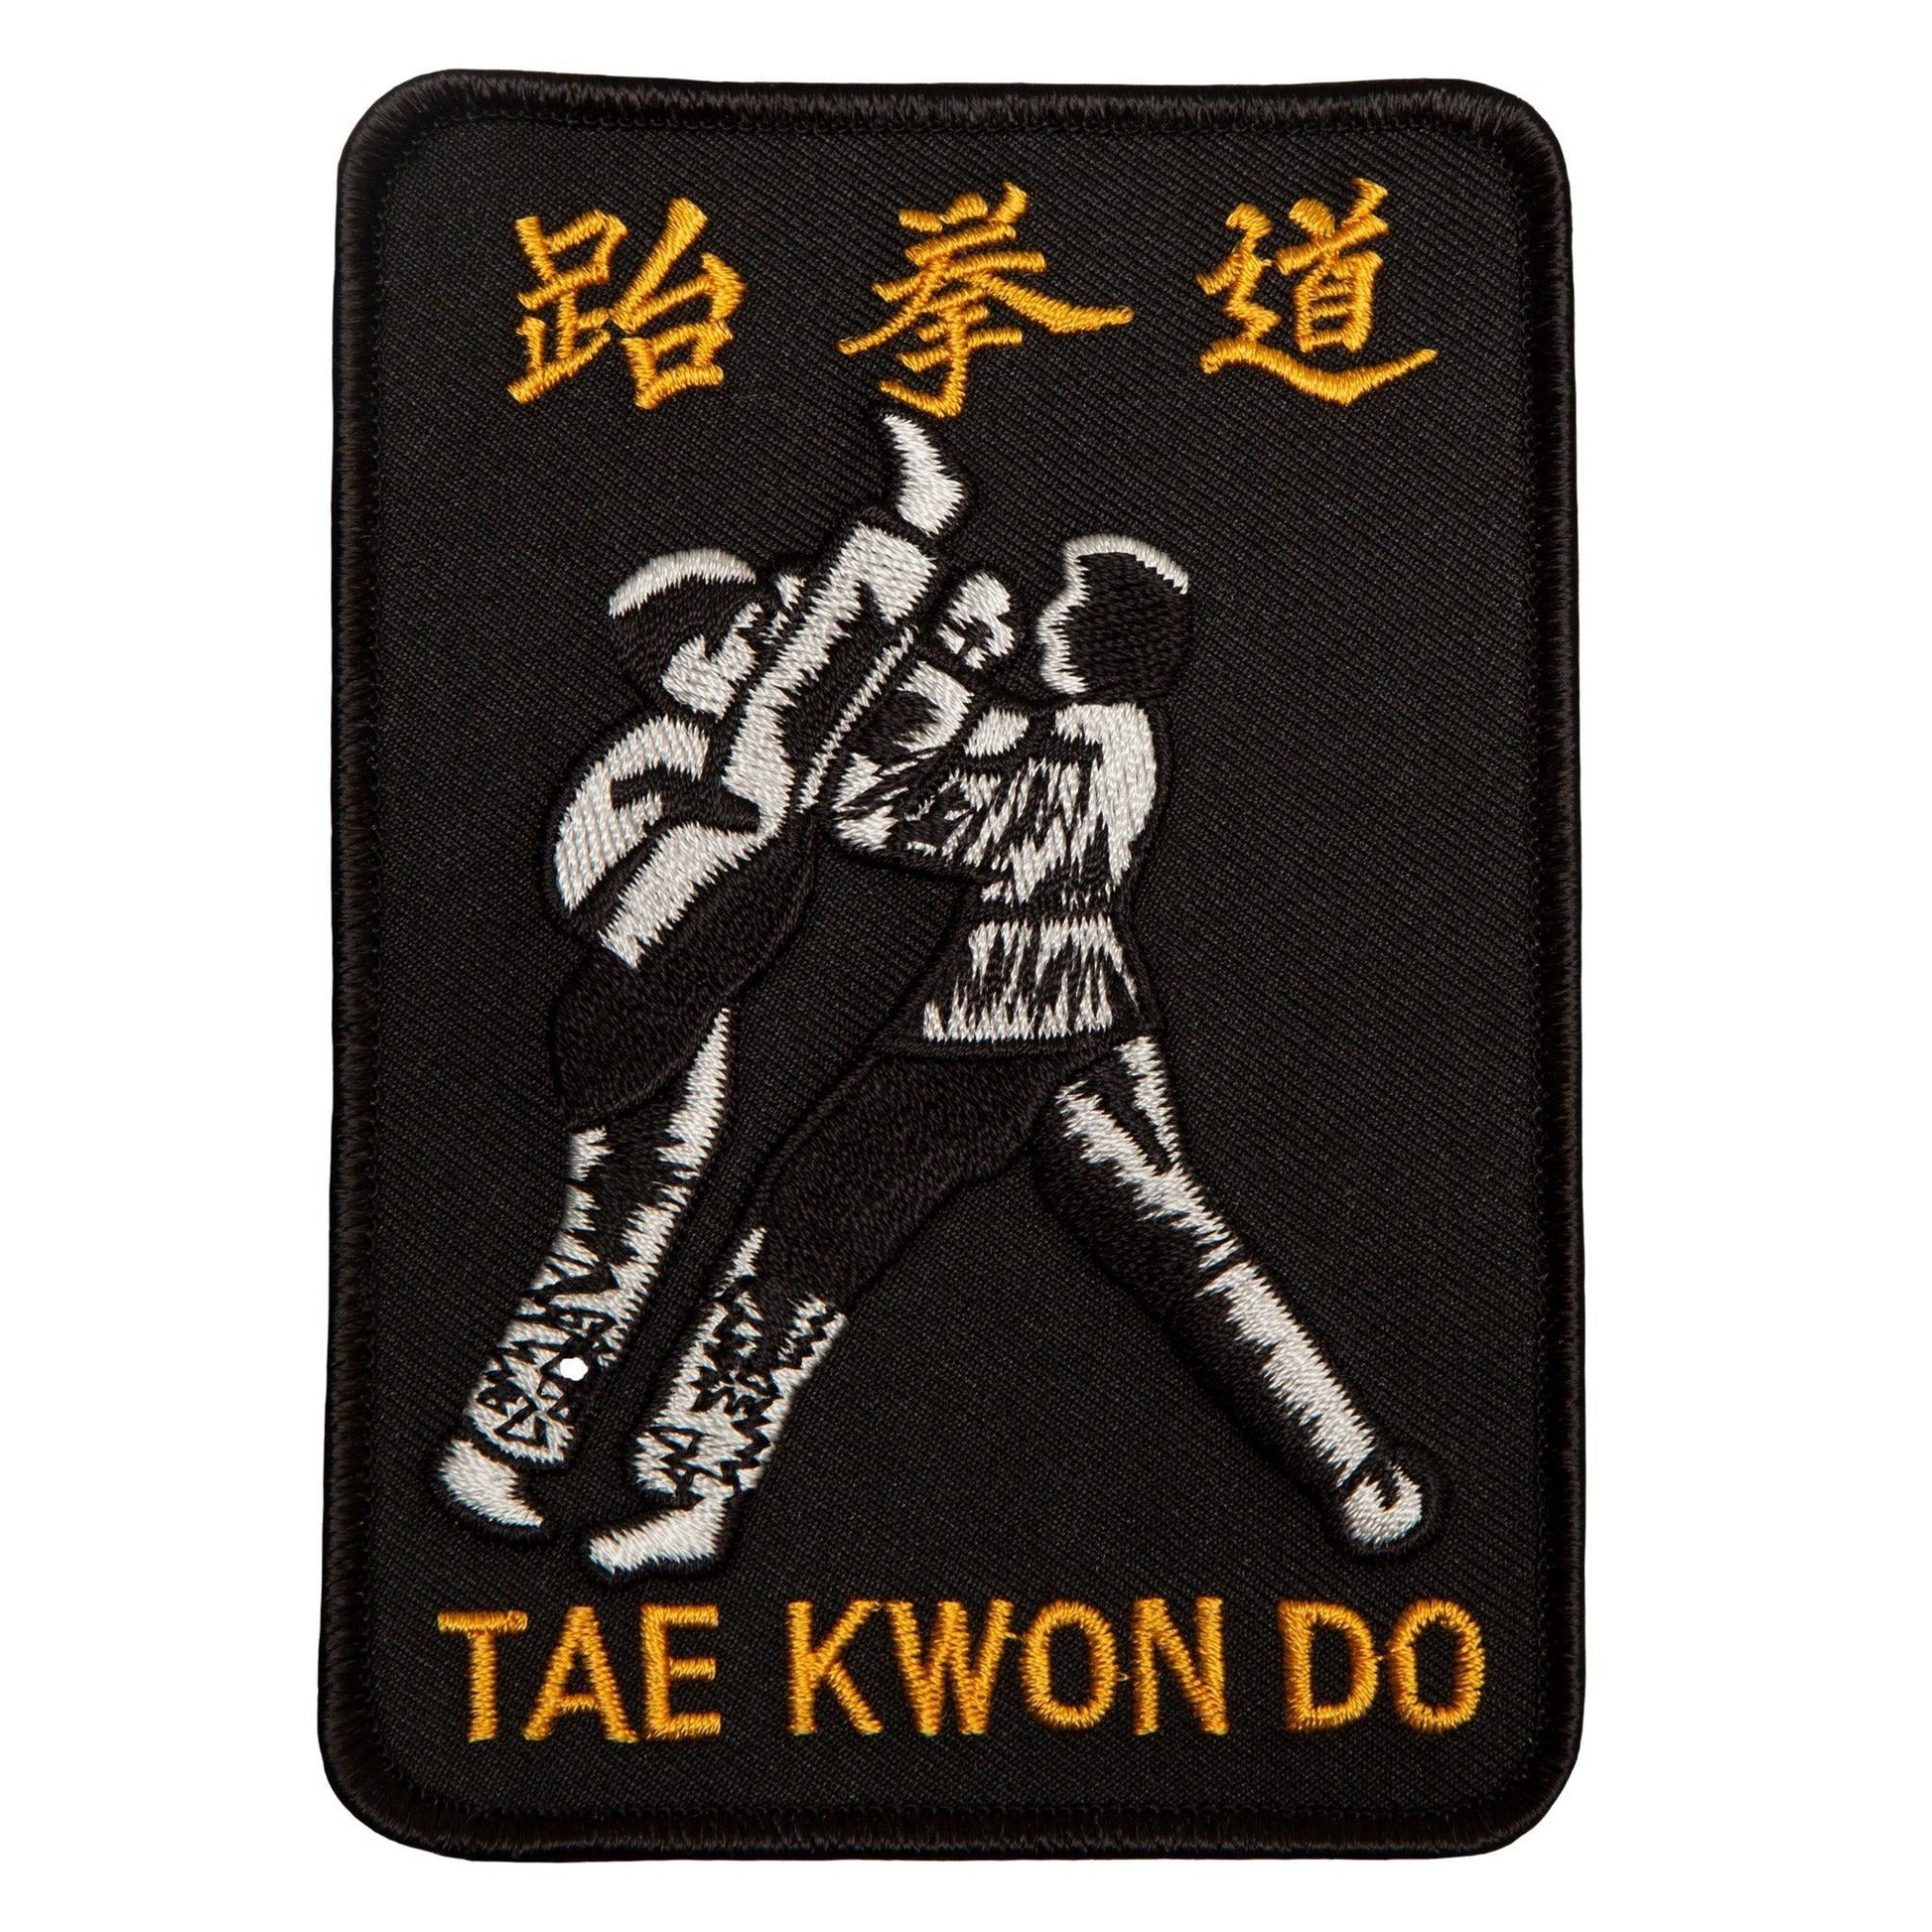 Tae Kwon Do Fighters Patch - Violent Art Shop